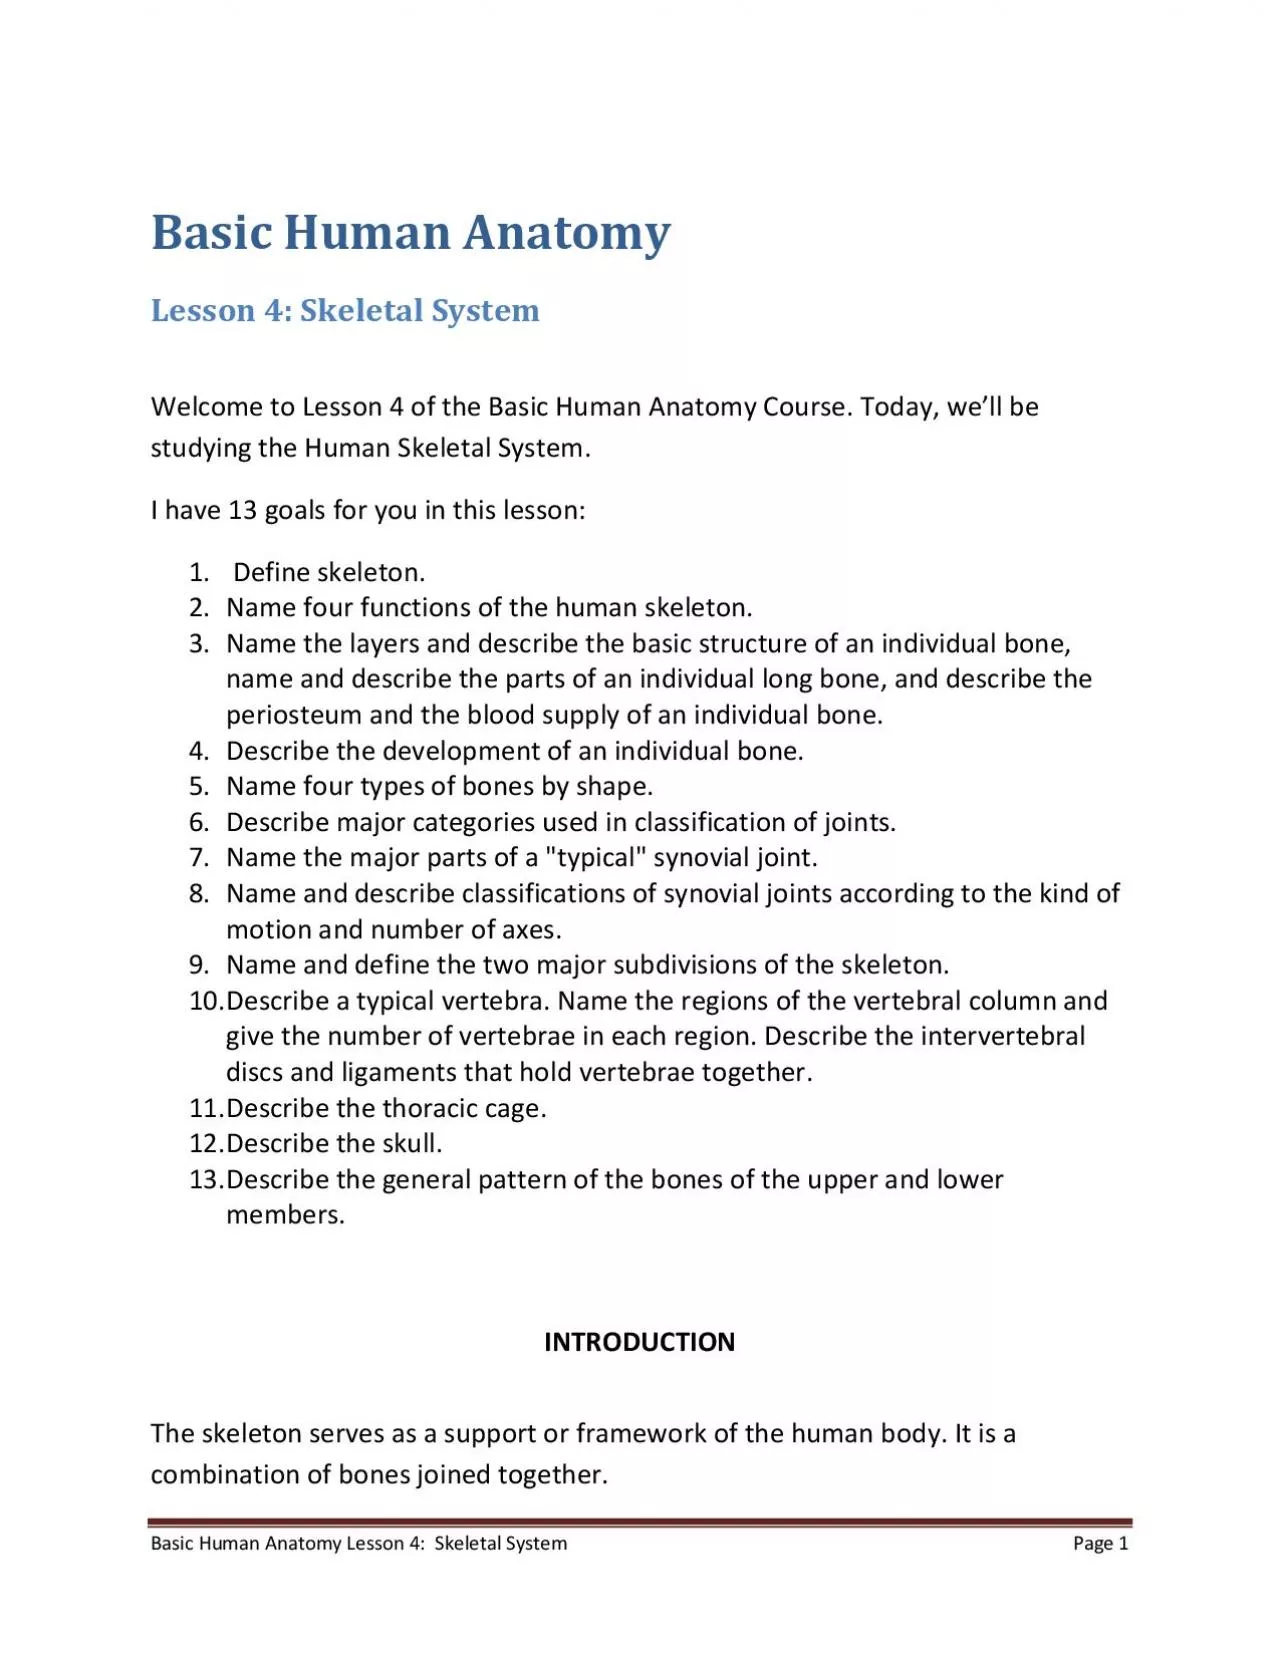 Basic Human Anatomy Lesson